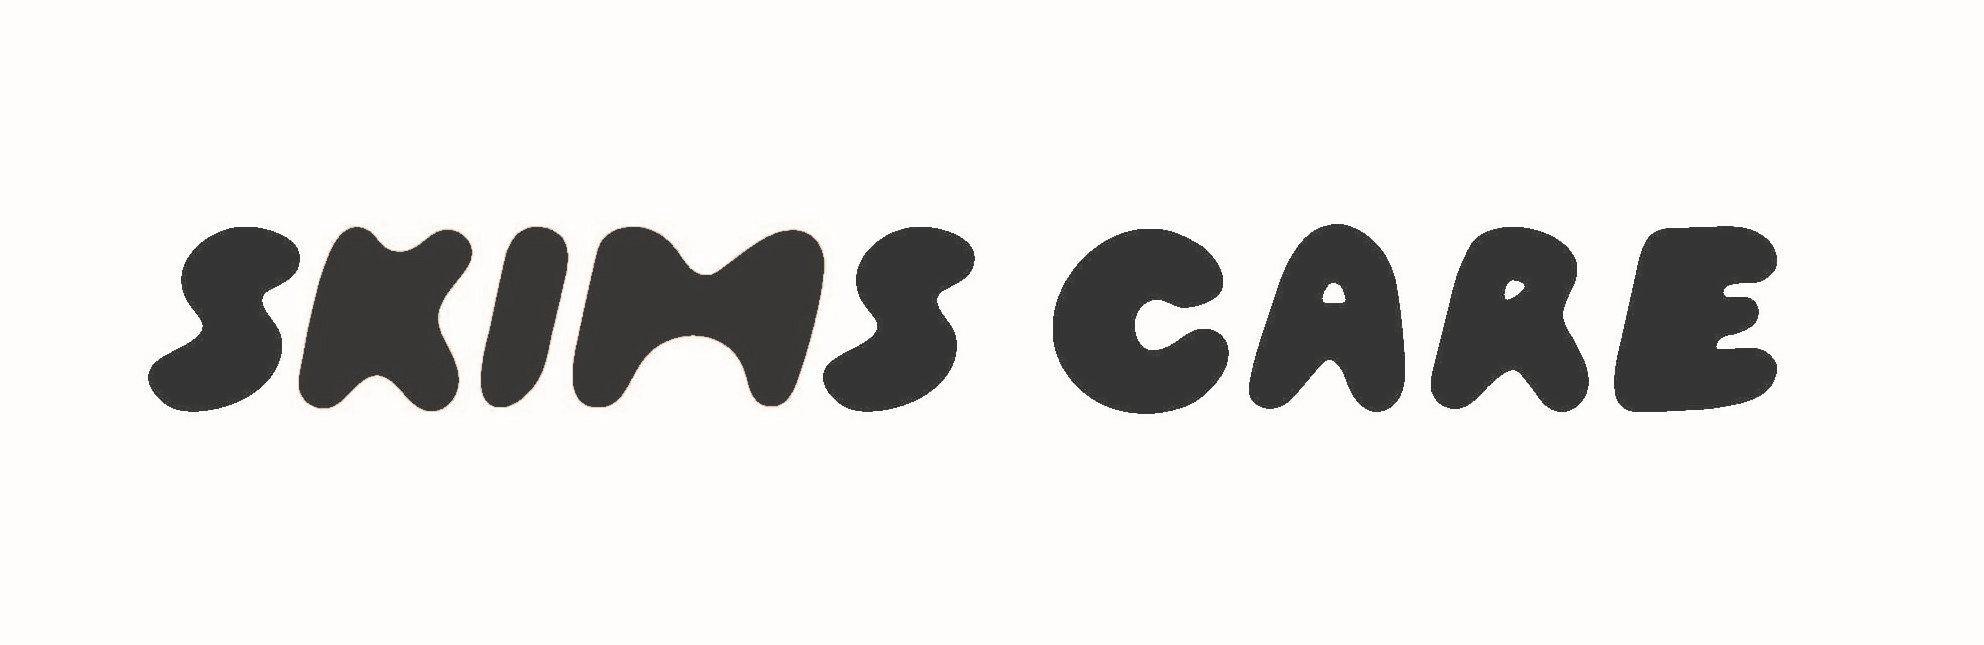 SKIMS CARE - Skims Body, Inc. Trademark Registration